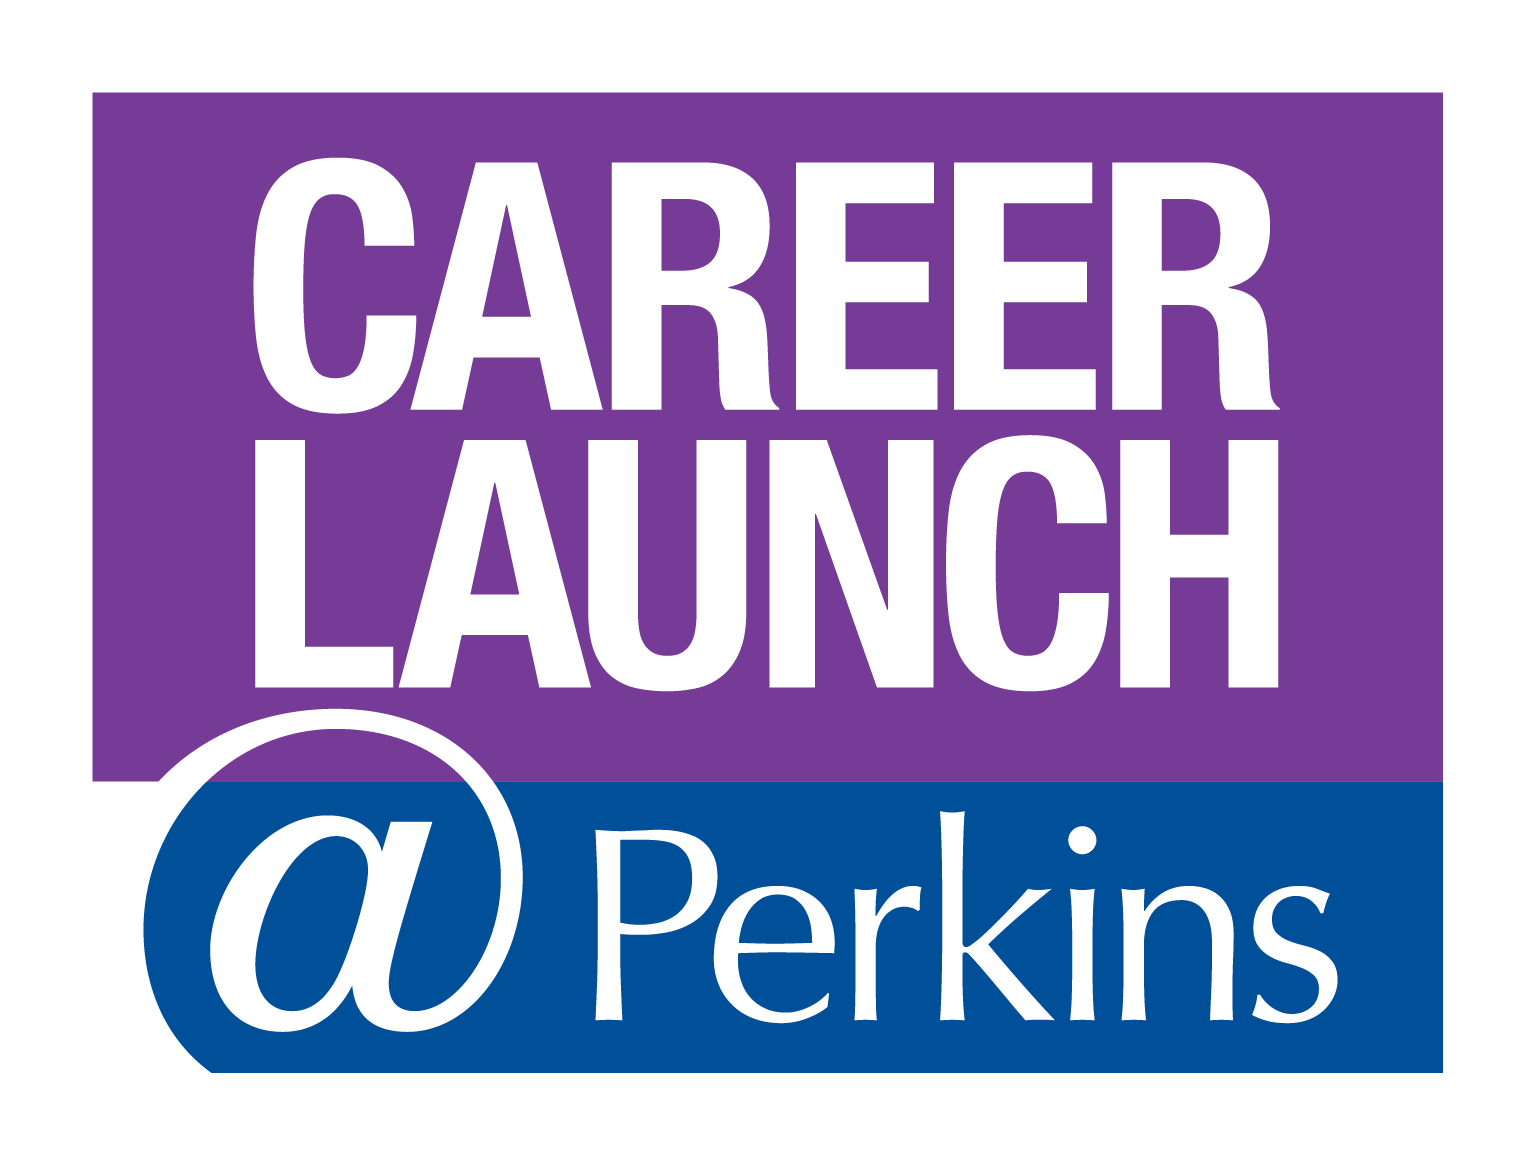 Career Launch @ Perkins logo